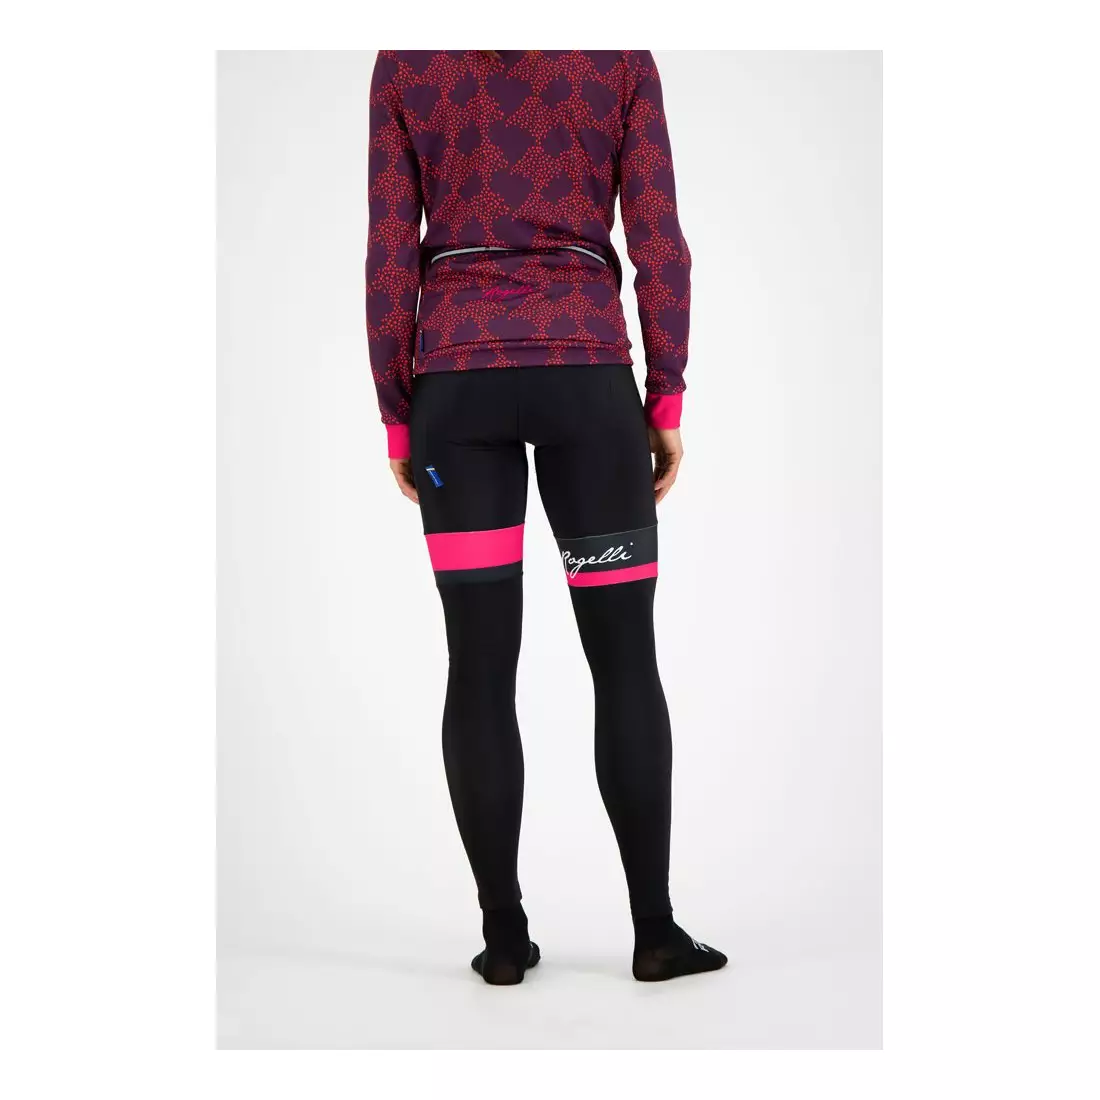 ROGELLI zimowe spodnie rowerowe damskie SELECT black/pink